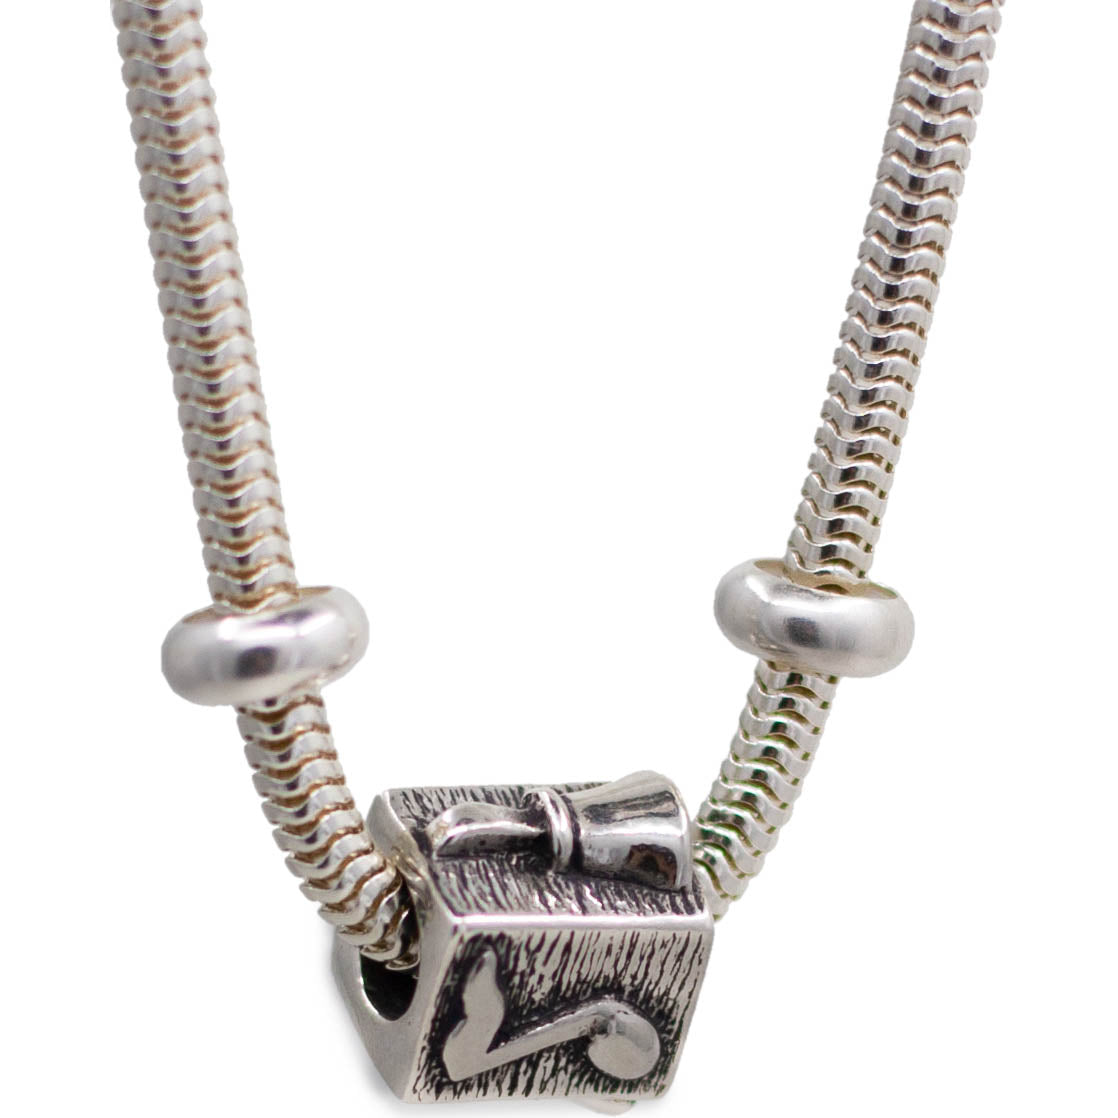 Bracelet Charm Bead - Pandora compatible, sterling silver (FMI)